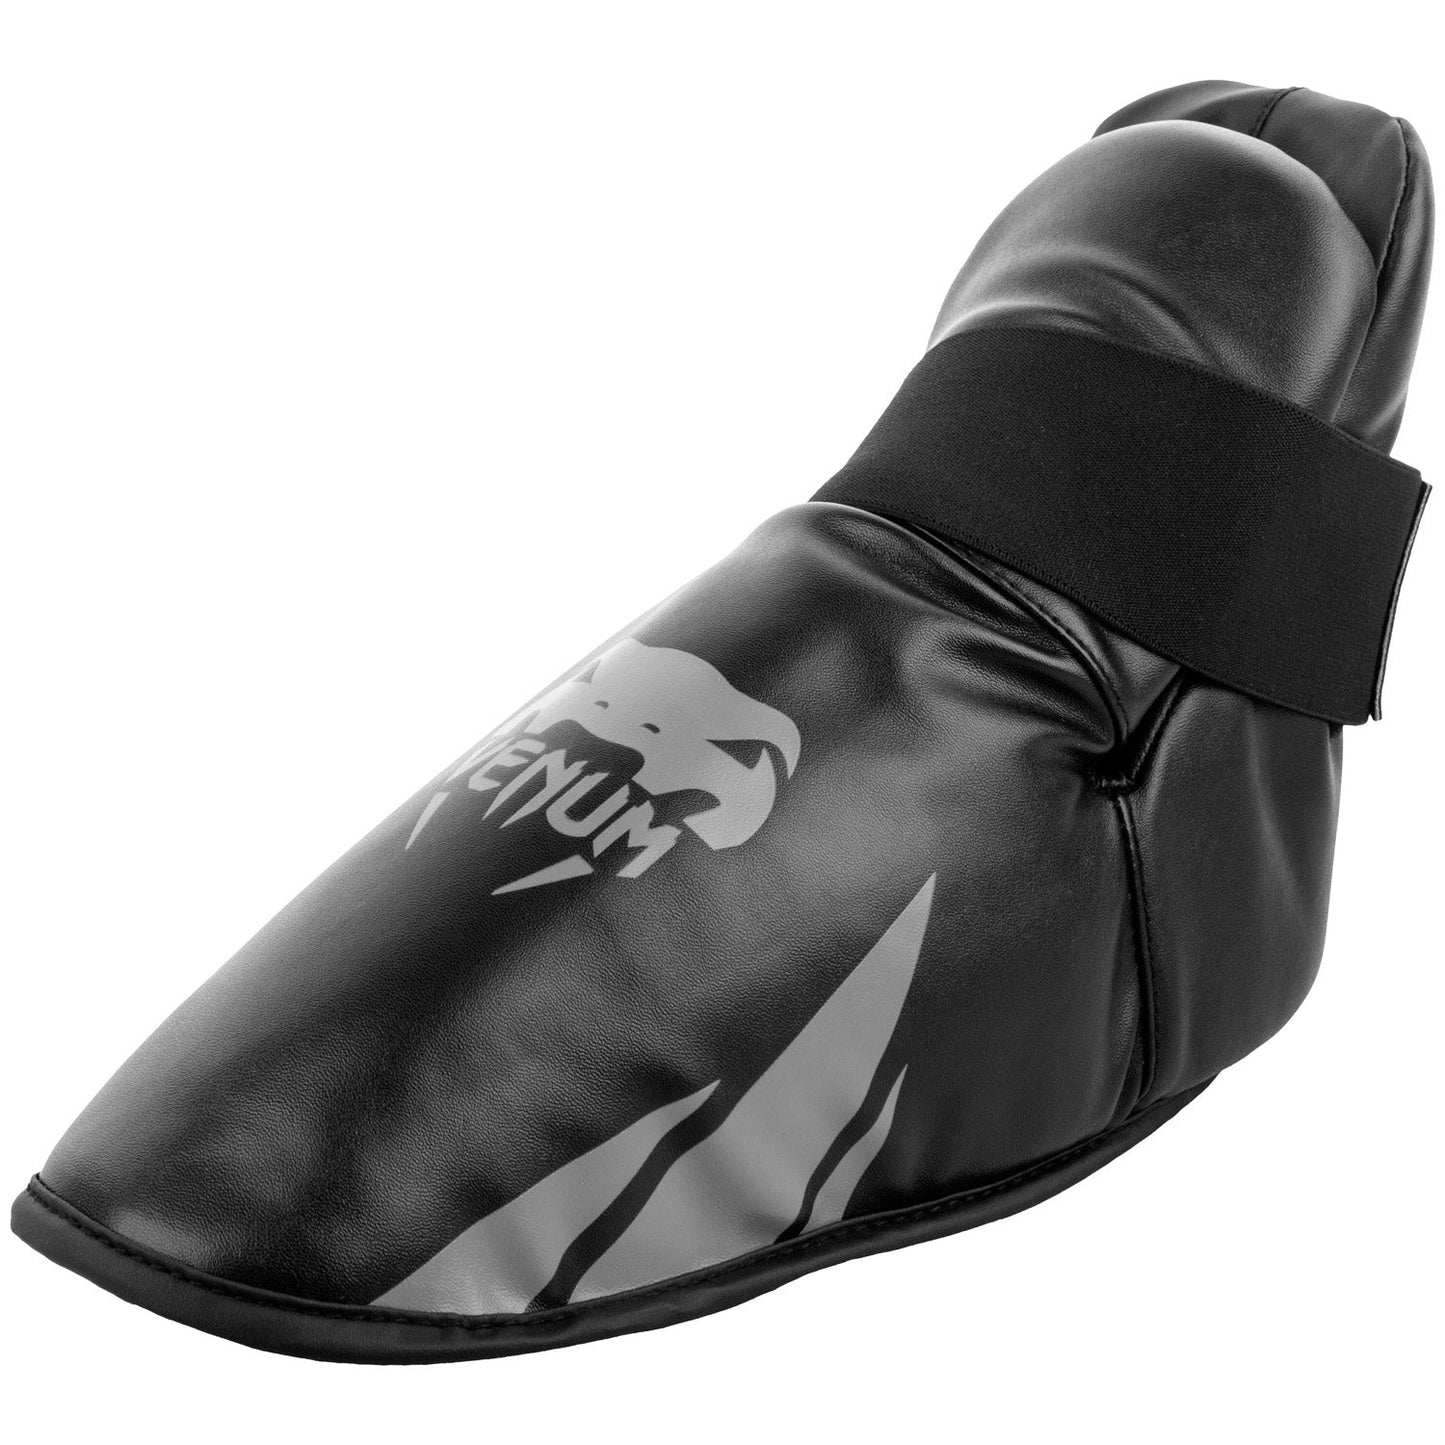 Venum Challenger Foot Gear - Black/Grey